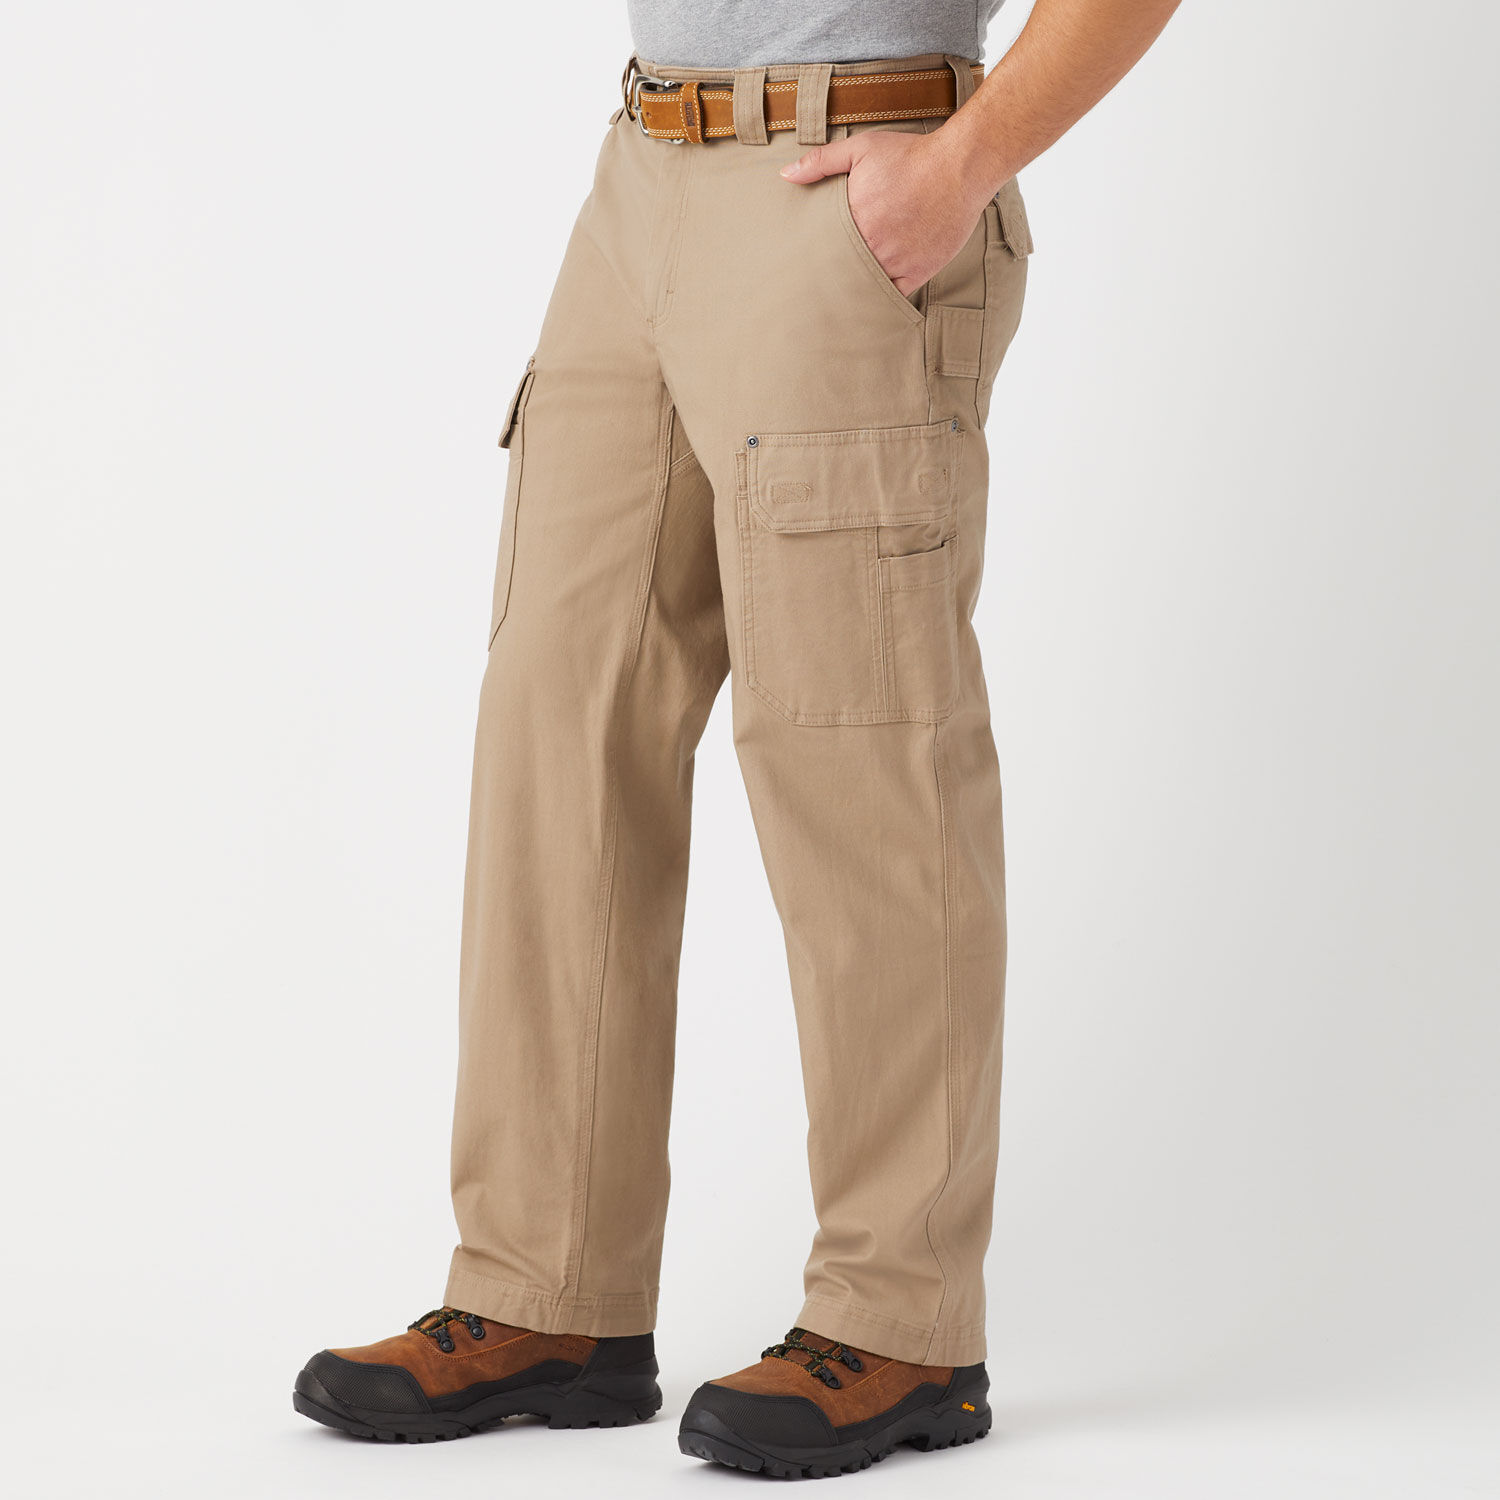 Regular Fit Flex Cargo Pants Men Heavy Duty Stretch Mens Work Pants  Sweatpants | eBay